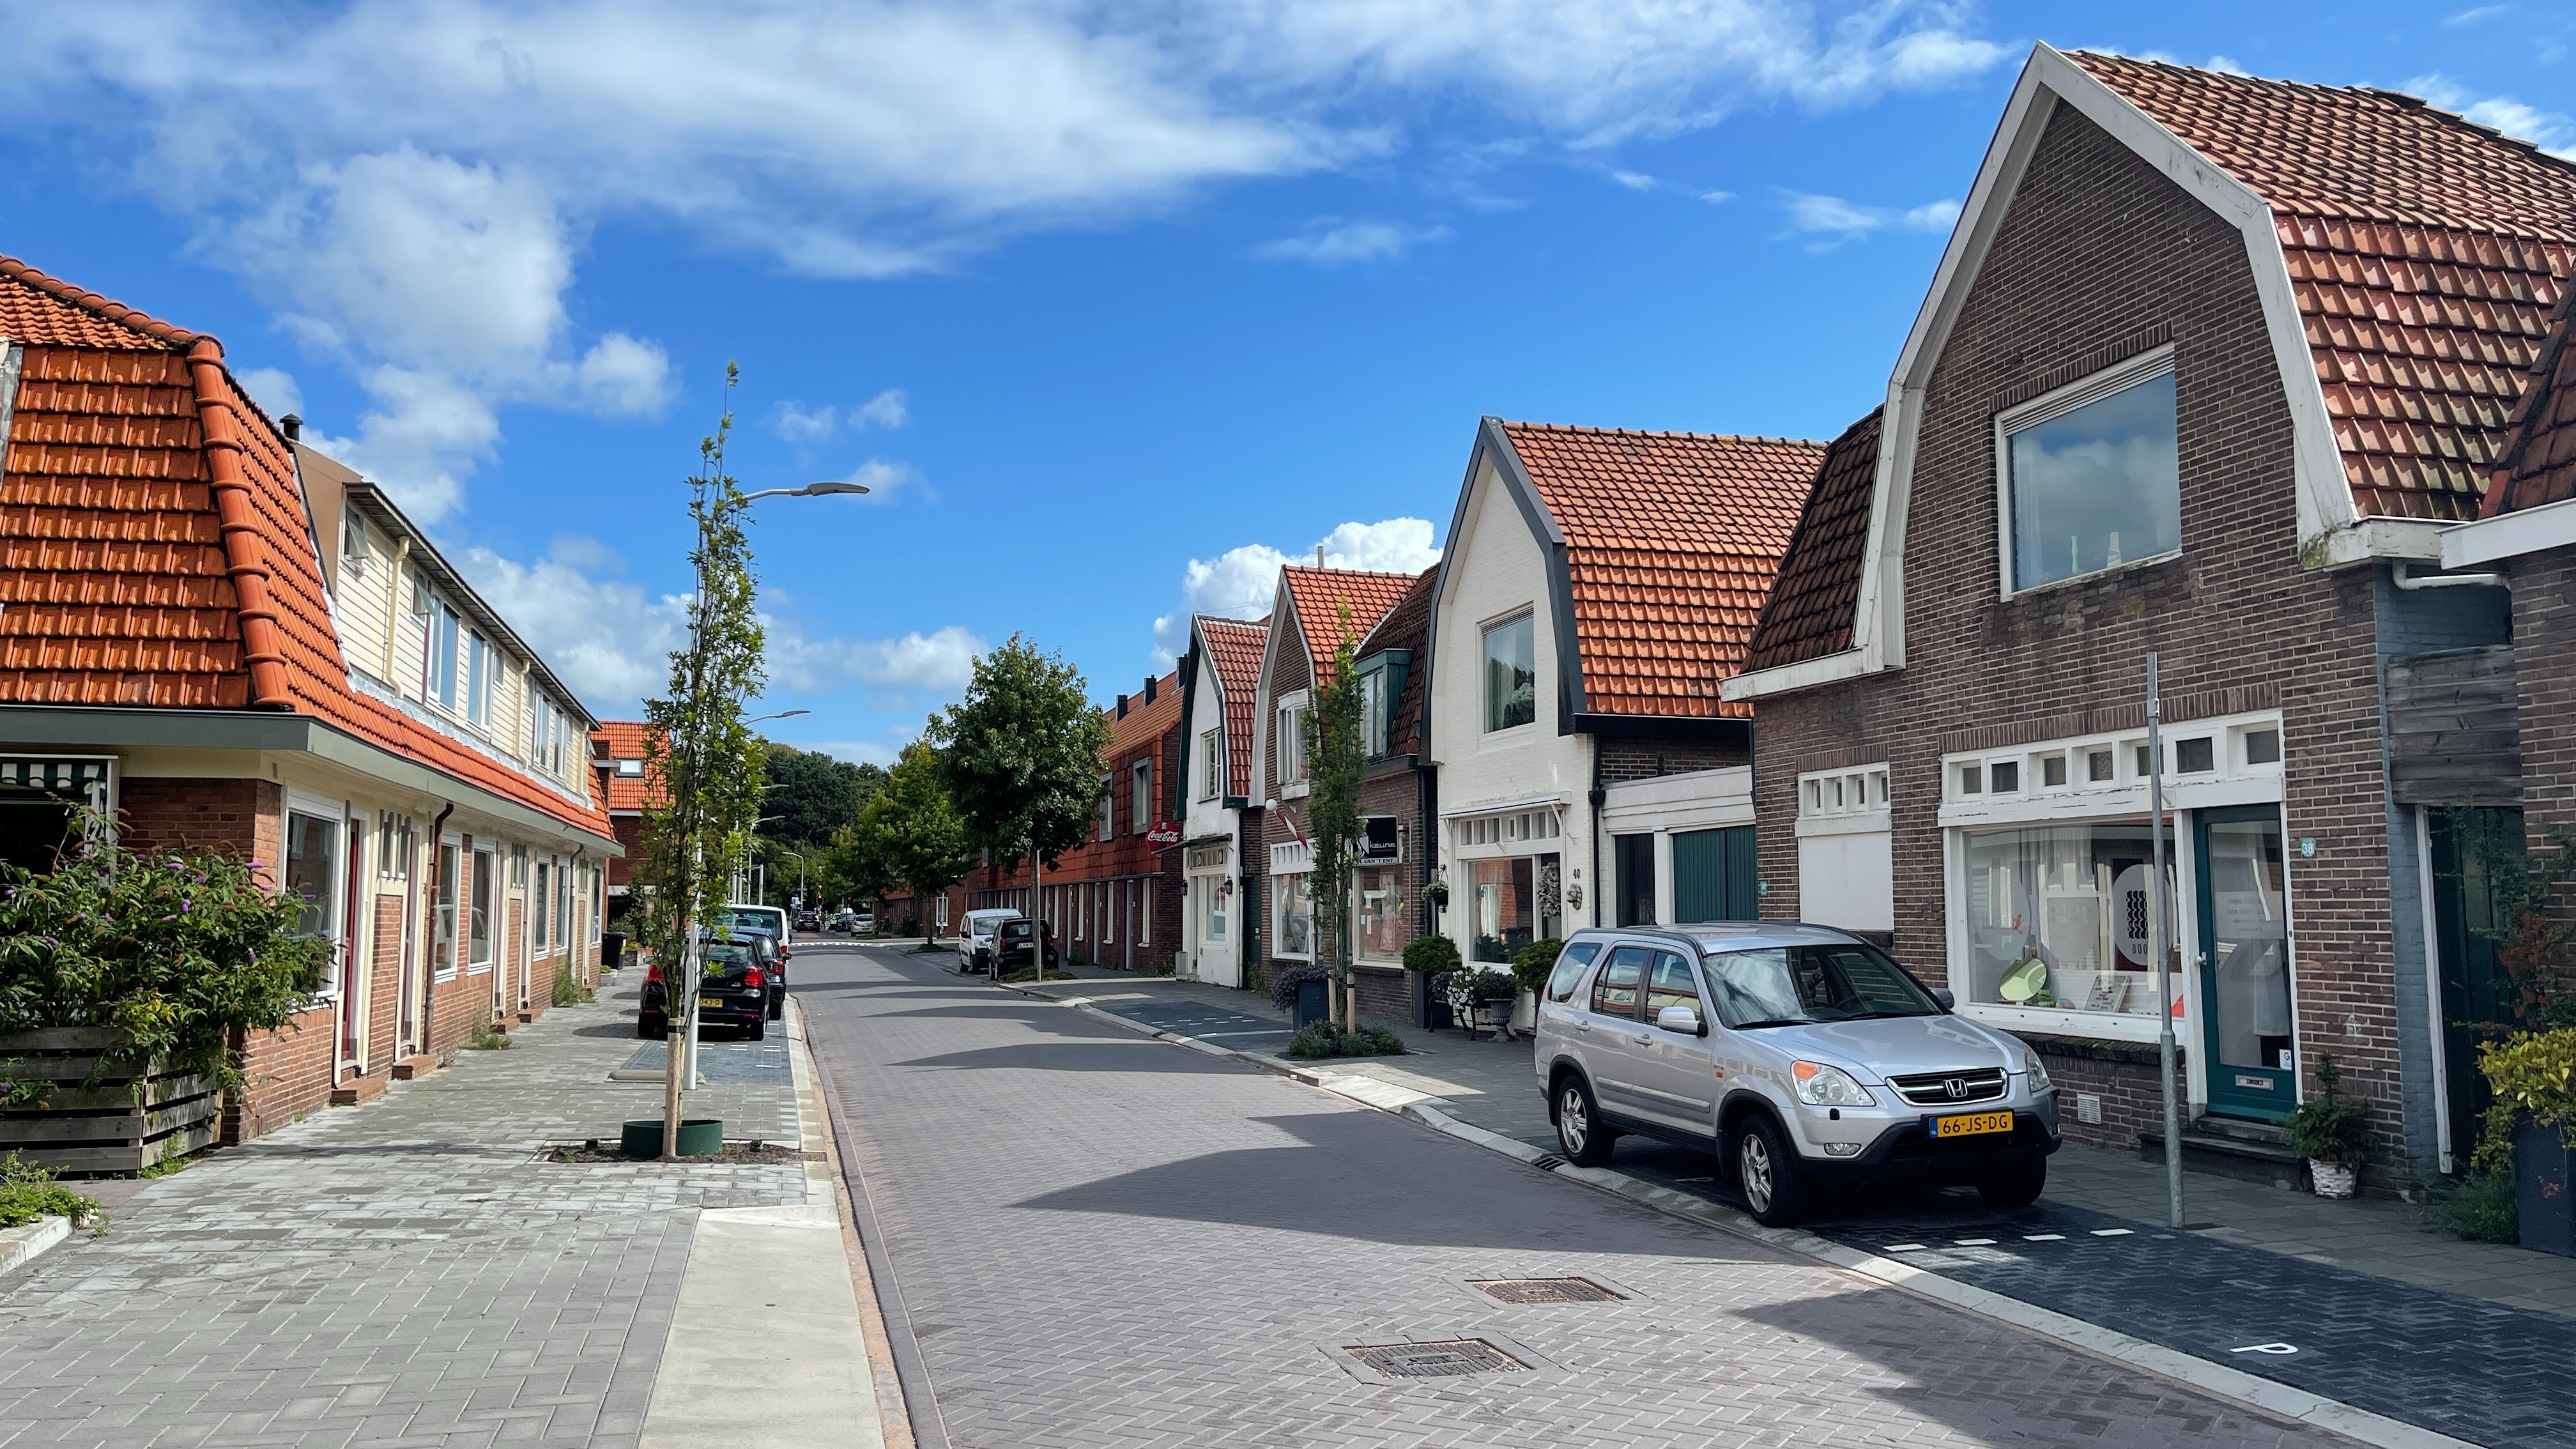 Woning / winkelpand - Zaandam - Kopermolenstraat 46